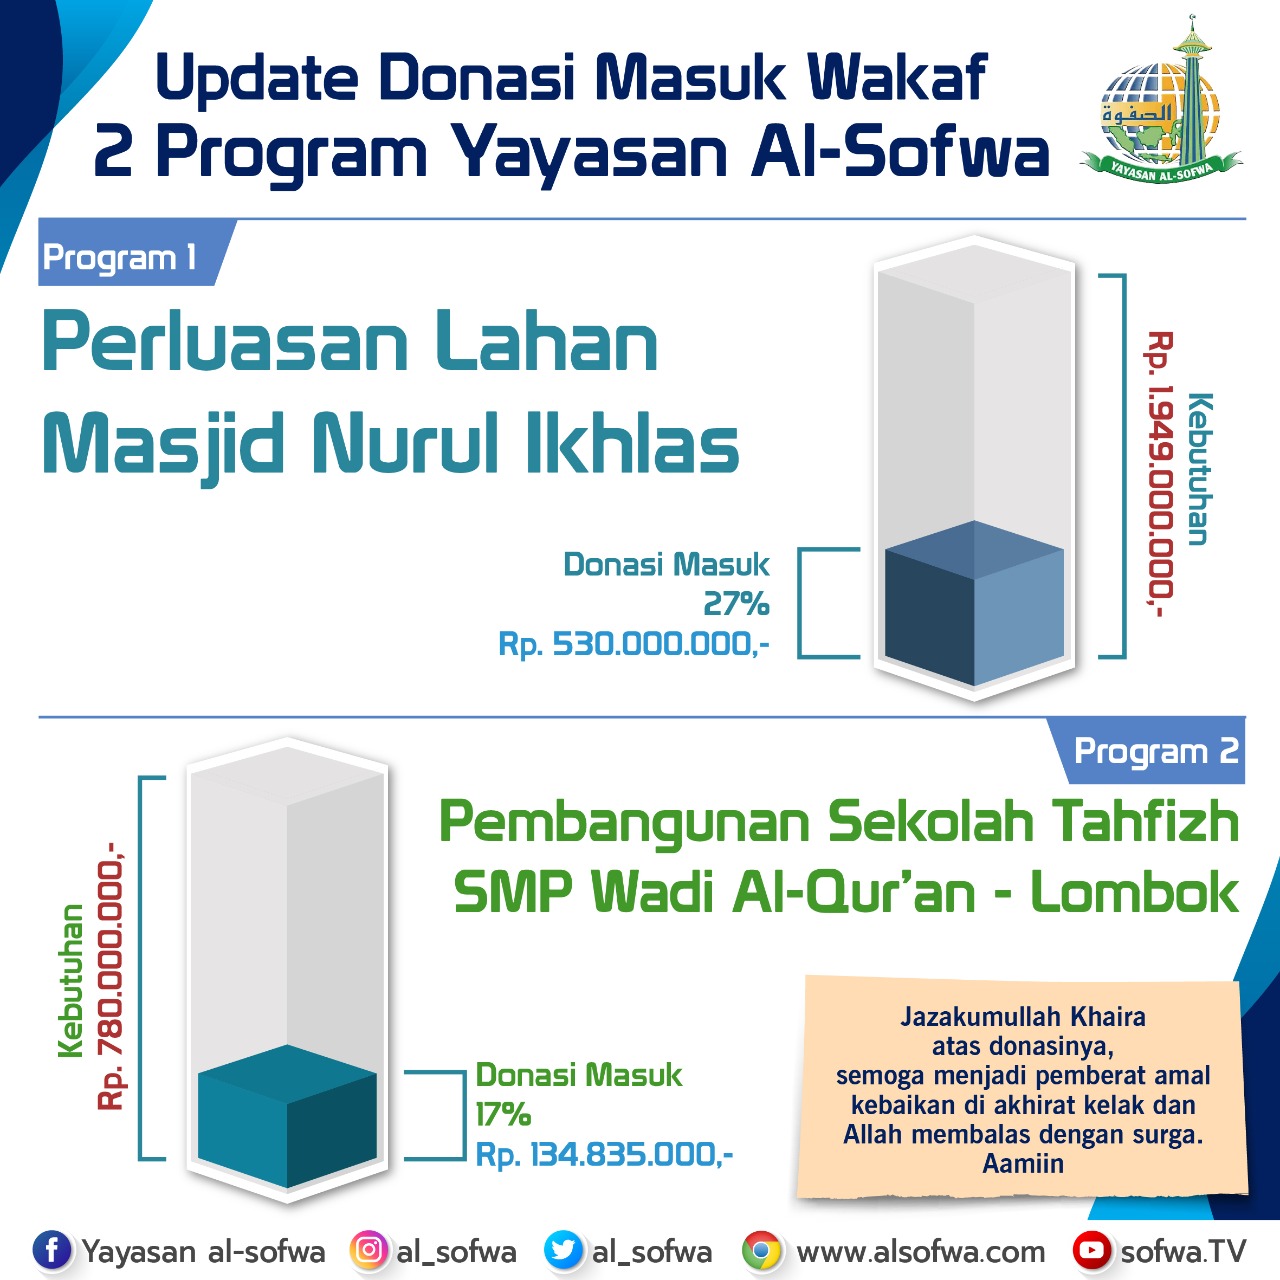 You are currently viewing Update Donasi Masuk 2 Program Wakaf Yayasan Al-Sofwa